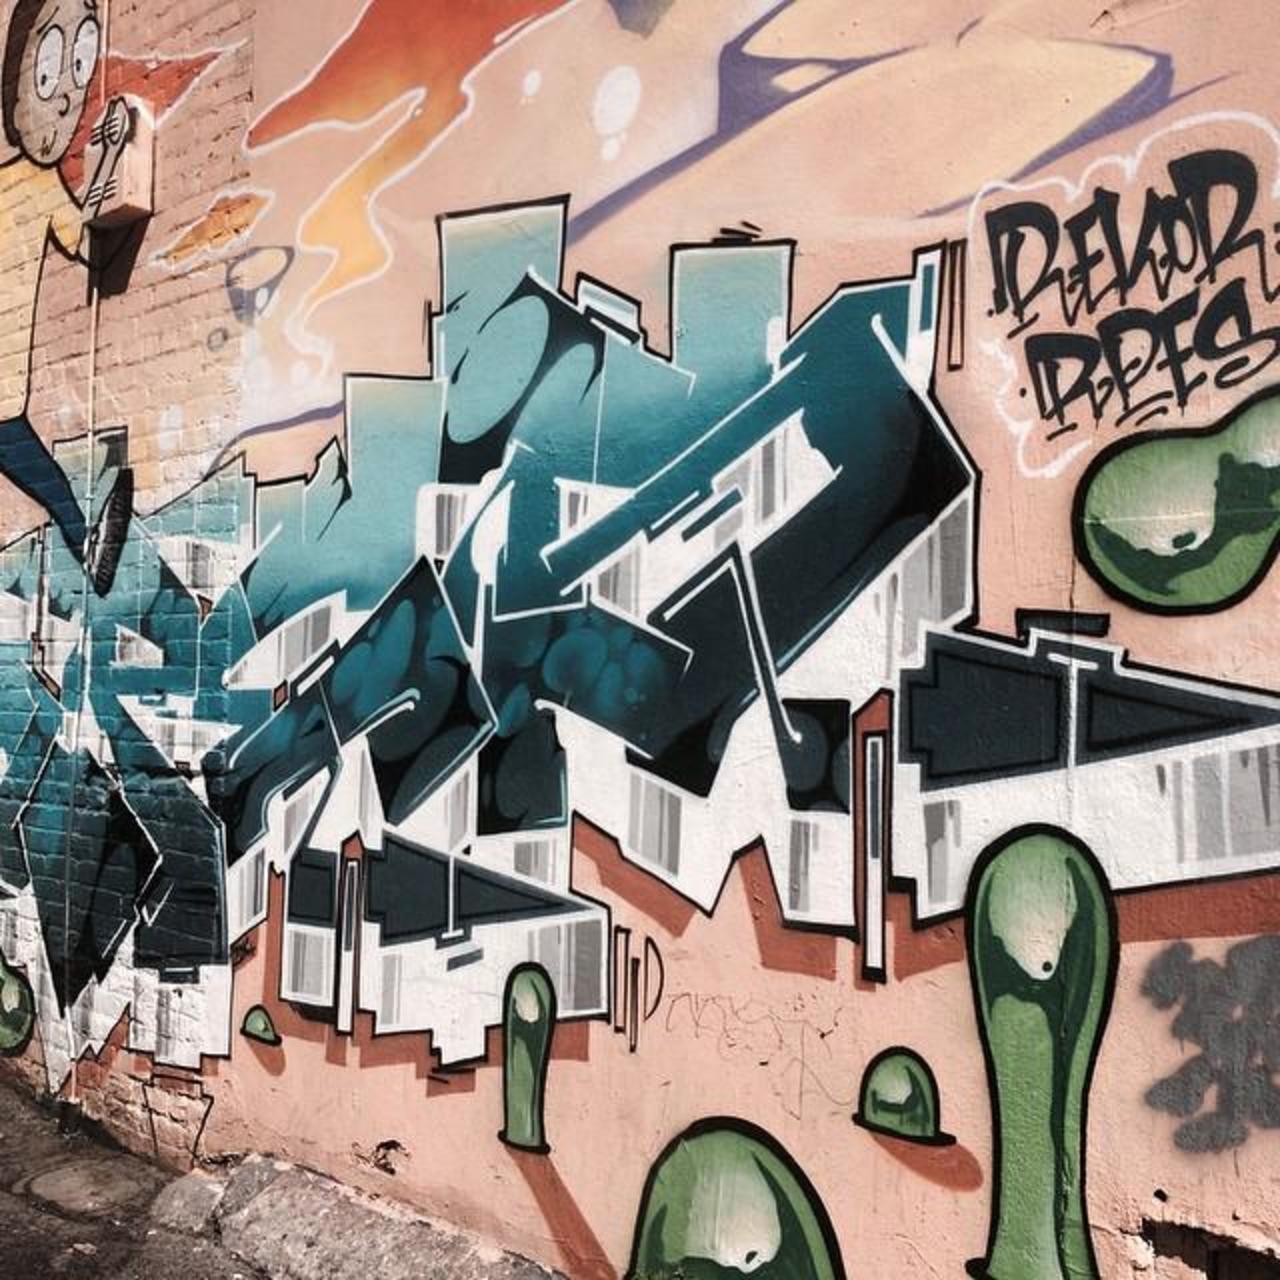 Mural Graffiti Arts
Taber Street
San Francisco, CA
#mural #muralarts #graff #graffiti #graffitiCA #outsider #outsid… http://t.co/2dXMwbrqKi